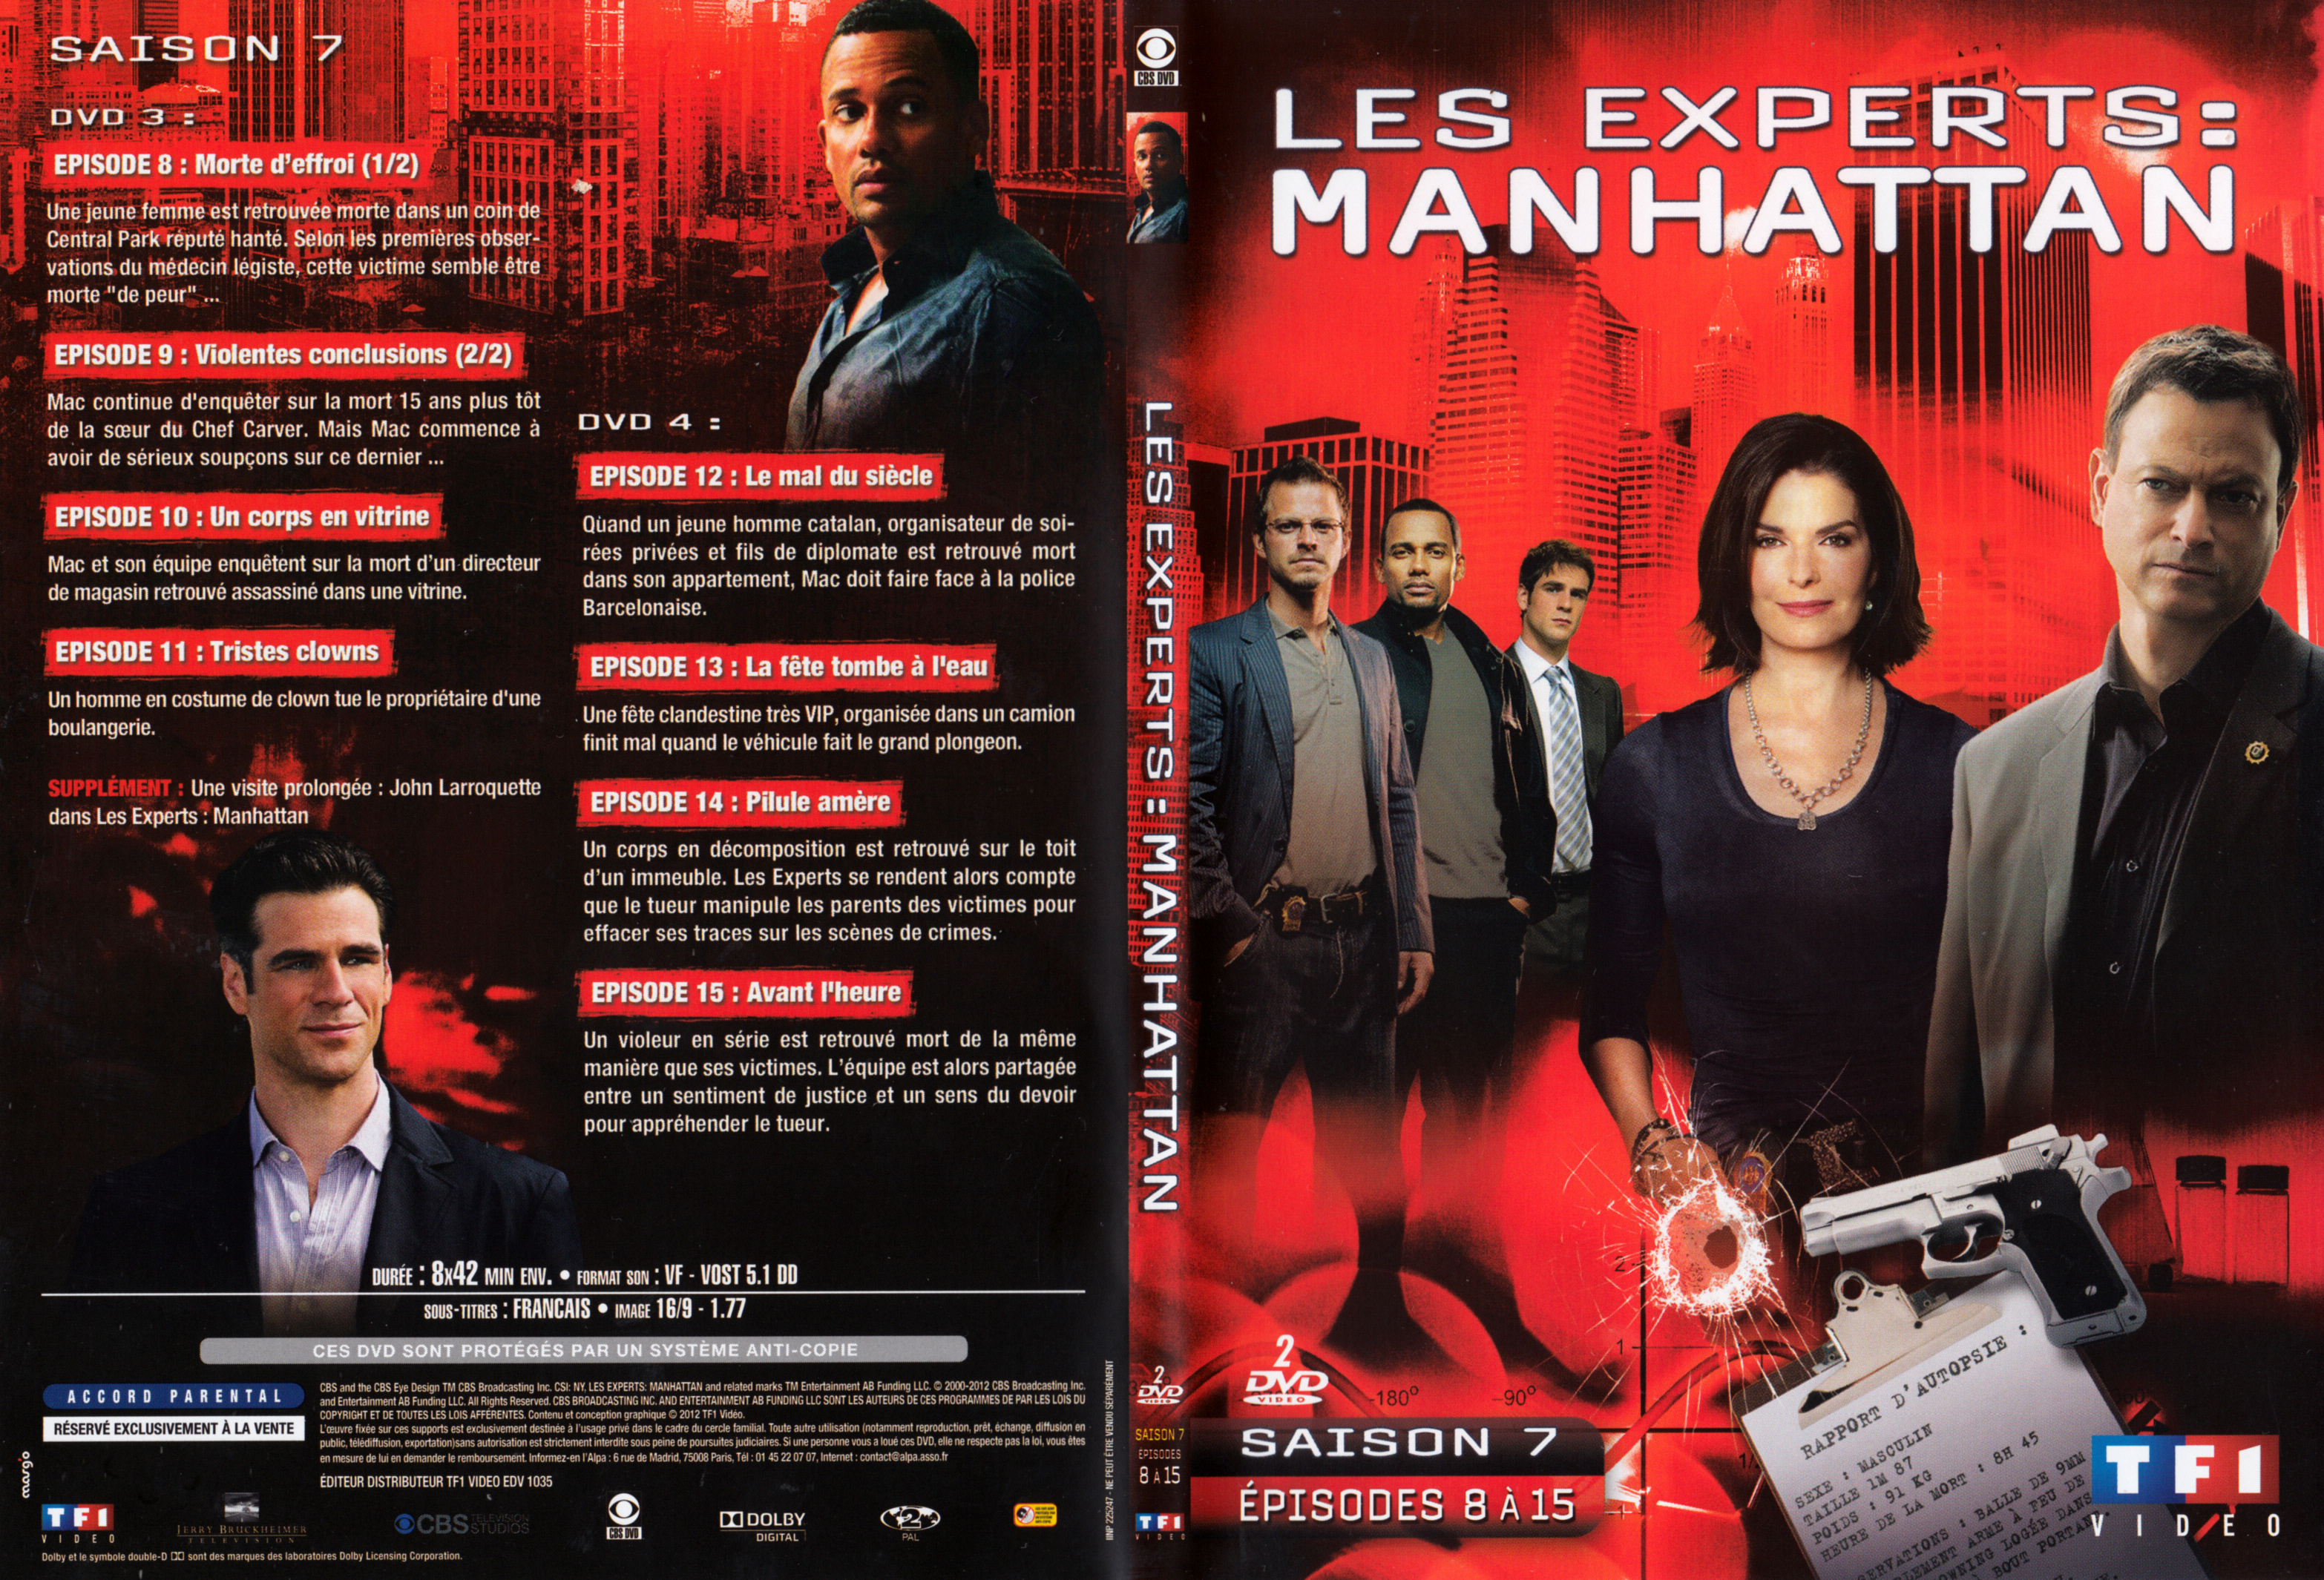 Jaquette DVD Les Experts Manhattan Saison 7 DVD 2